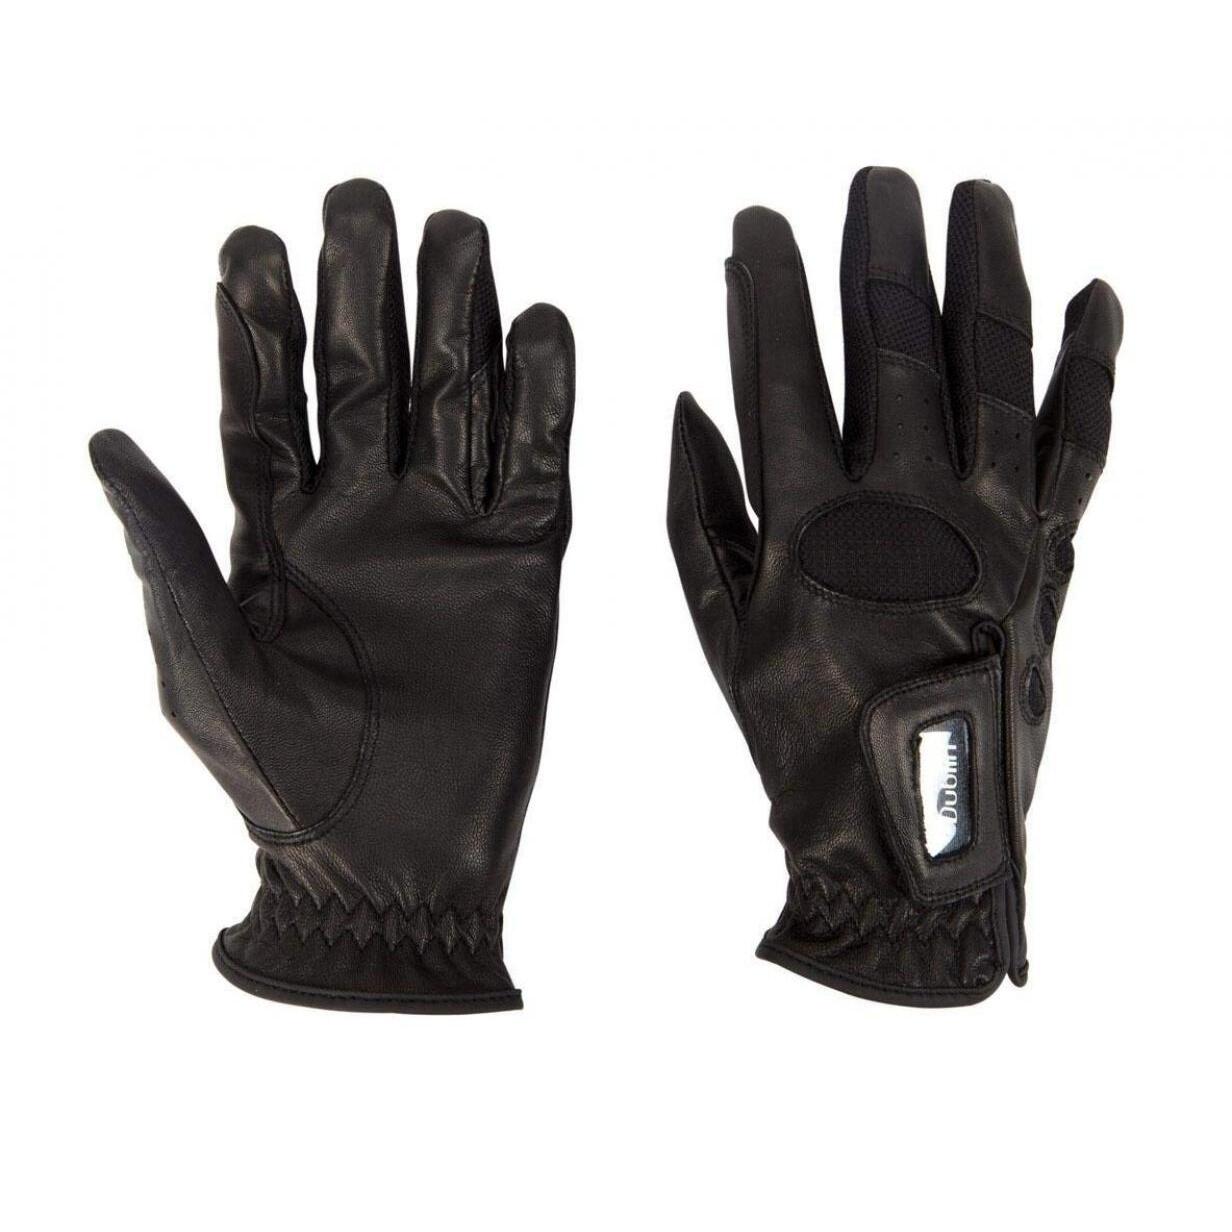 DUBLIN Unisex Leather Showjumping Riding Gloves (Black)